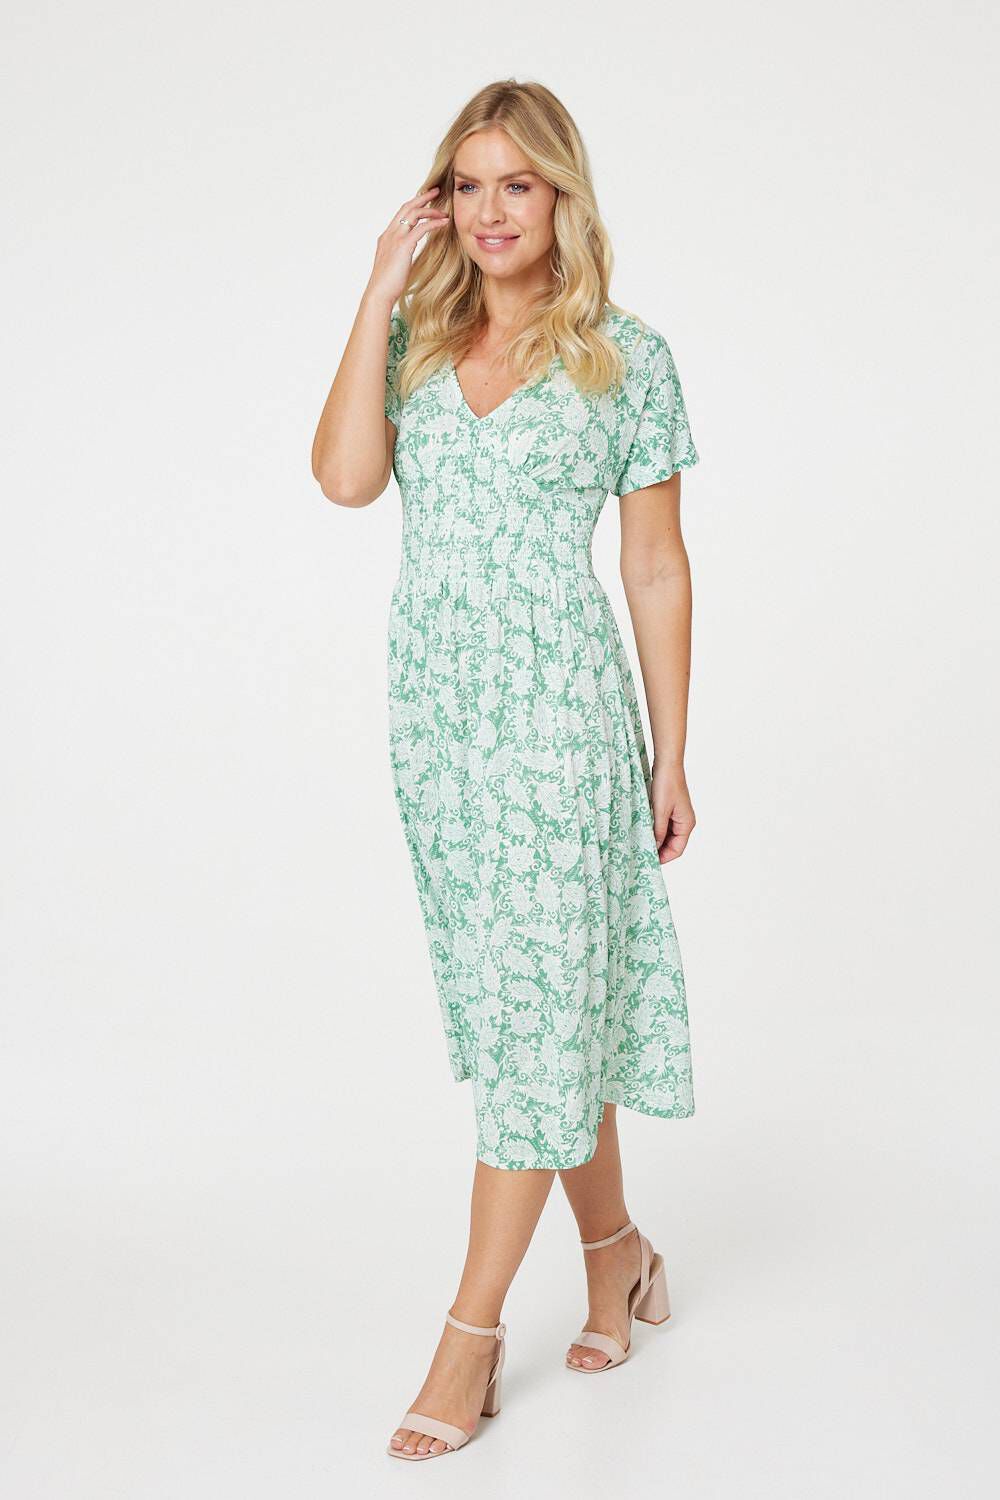 Izabel London Green - Paisley Shirred Detail Midi Dress, Size: 12